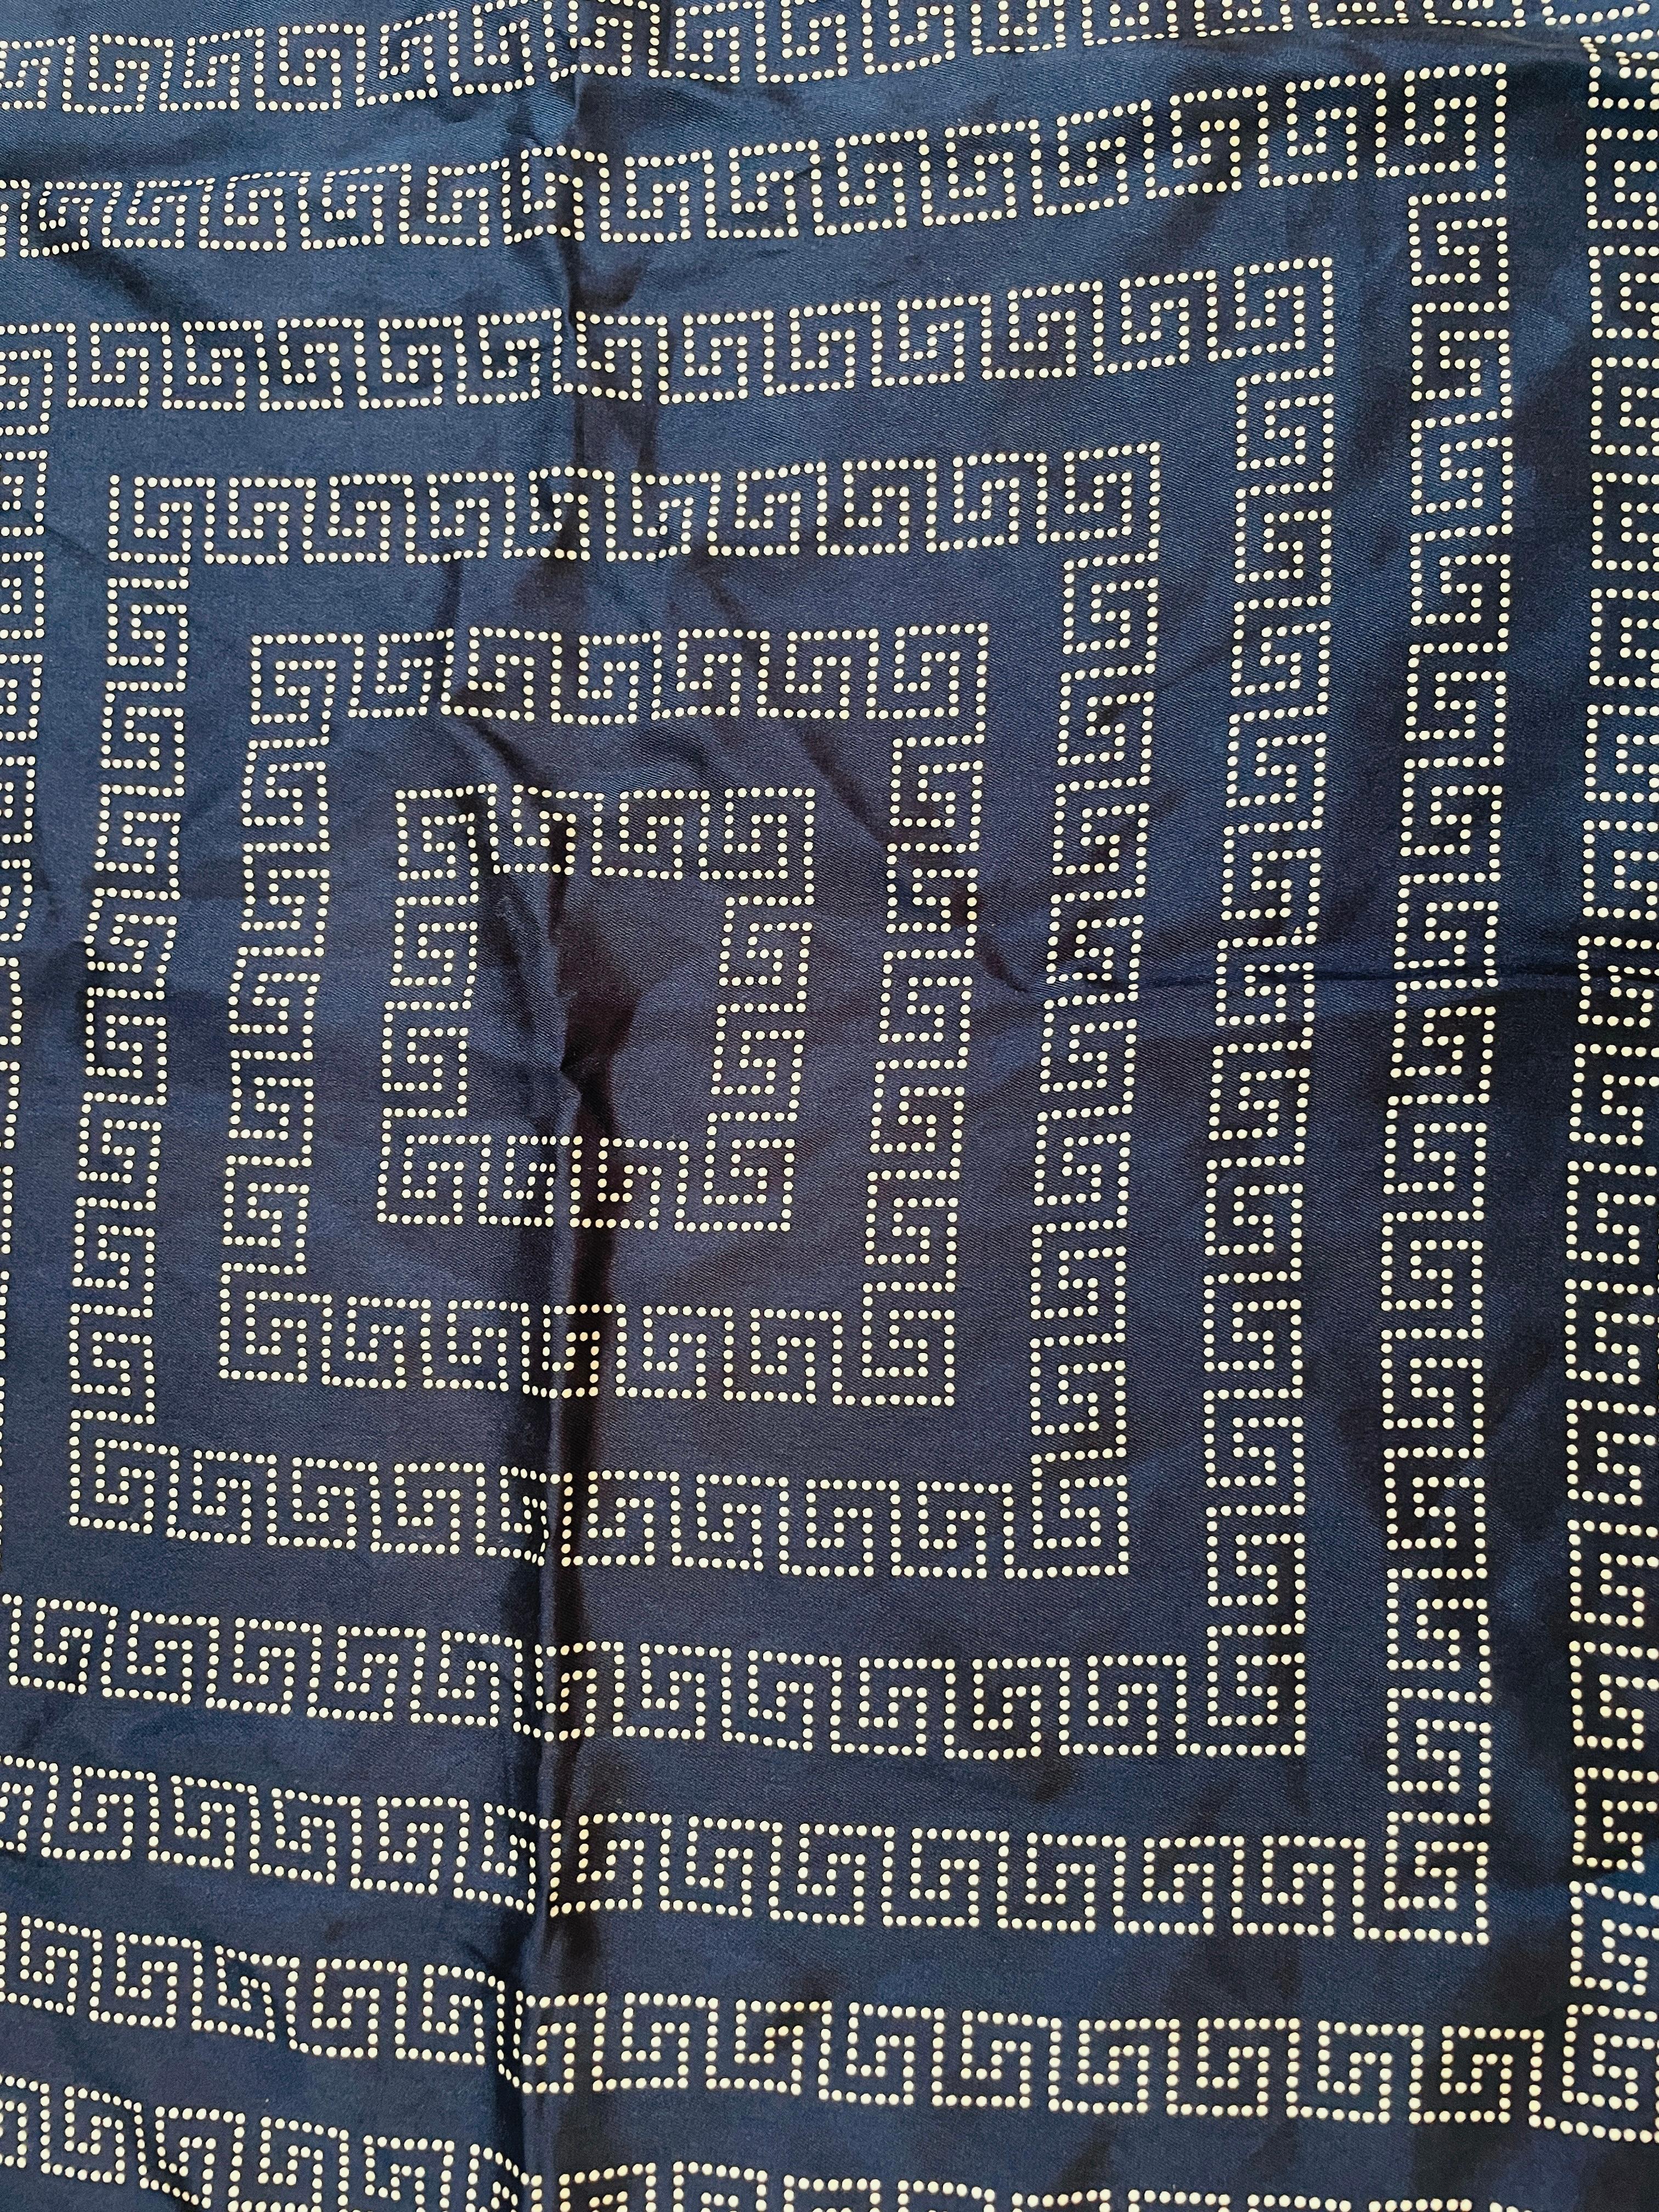 Silk Geometric Square Scarf Gentlemen Neckerchief Handkerchief In Good Condition For Sale In North Hollywood, CA